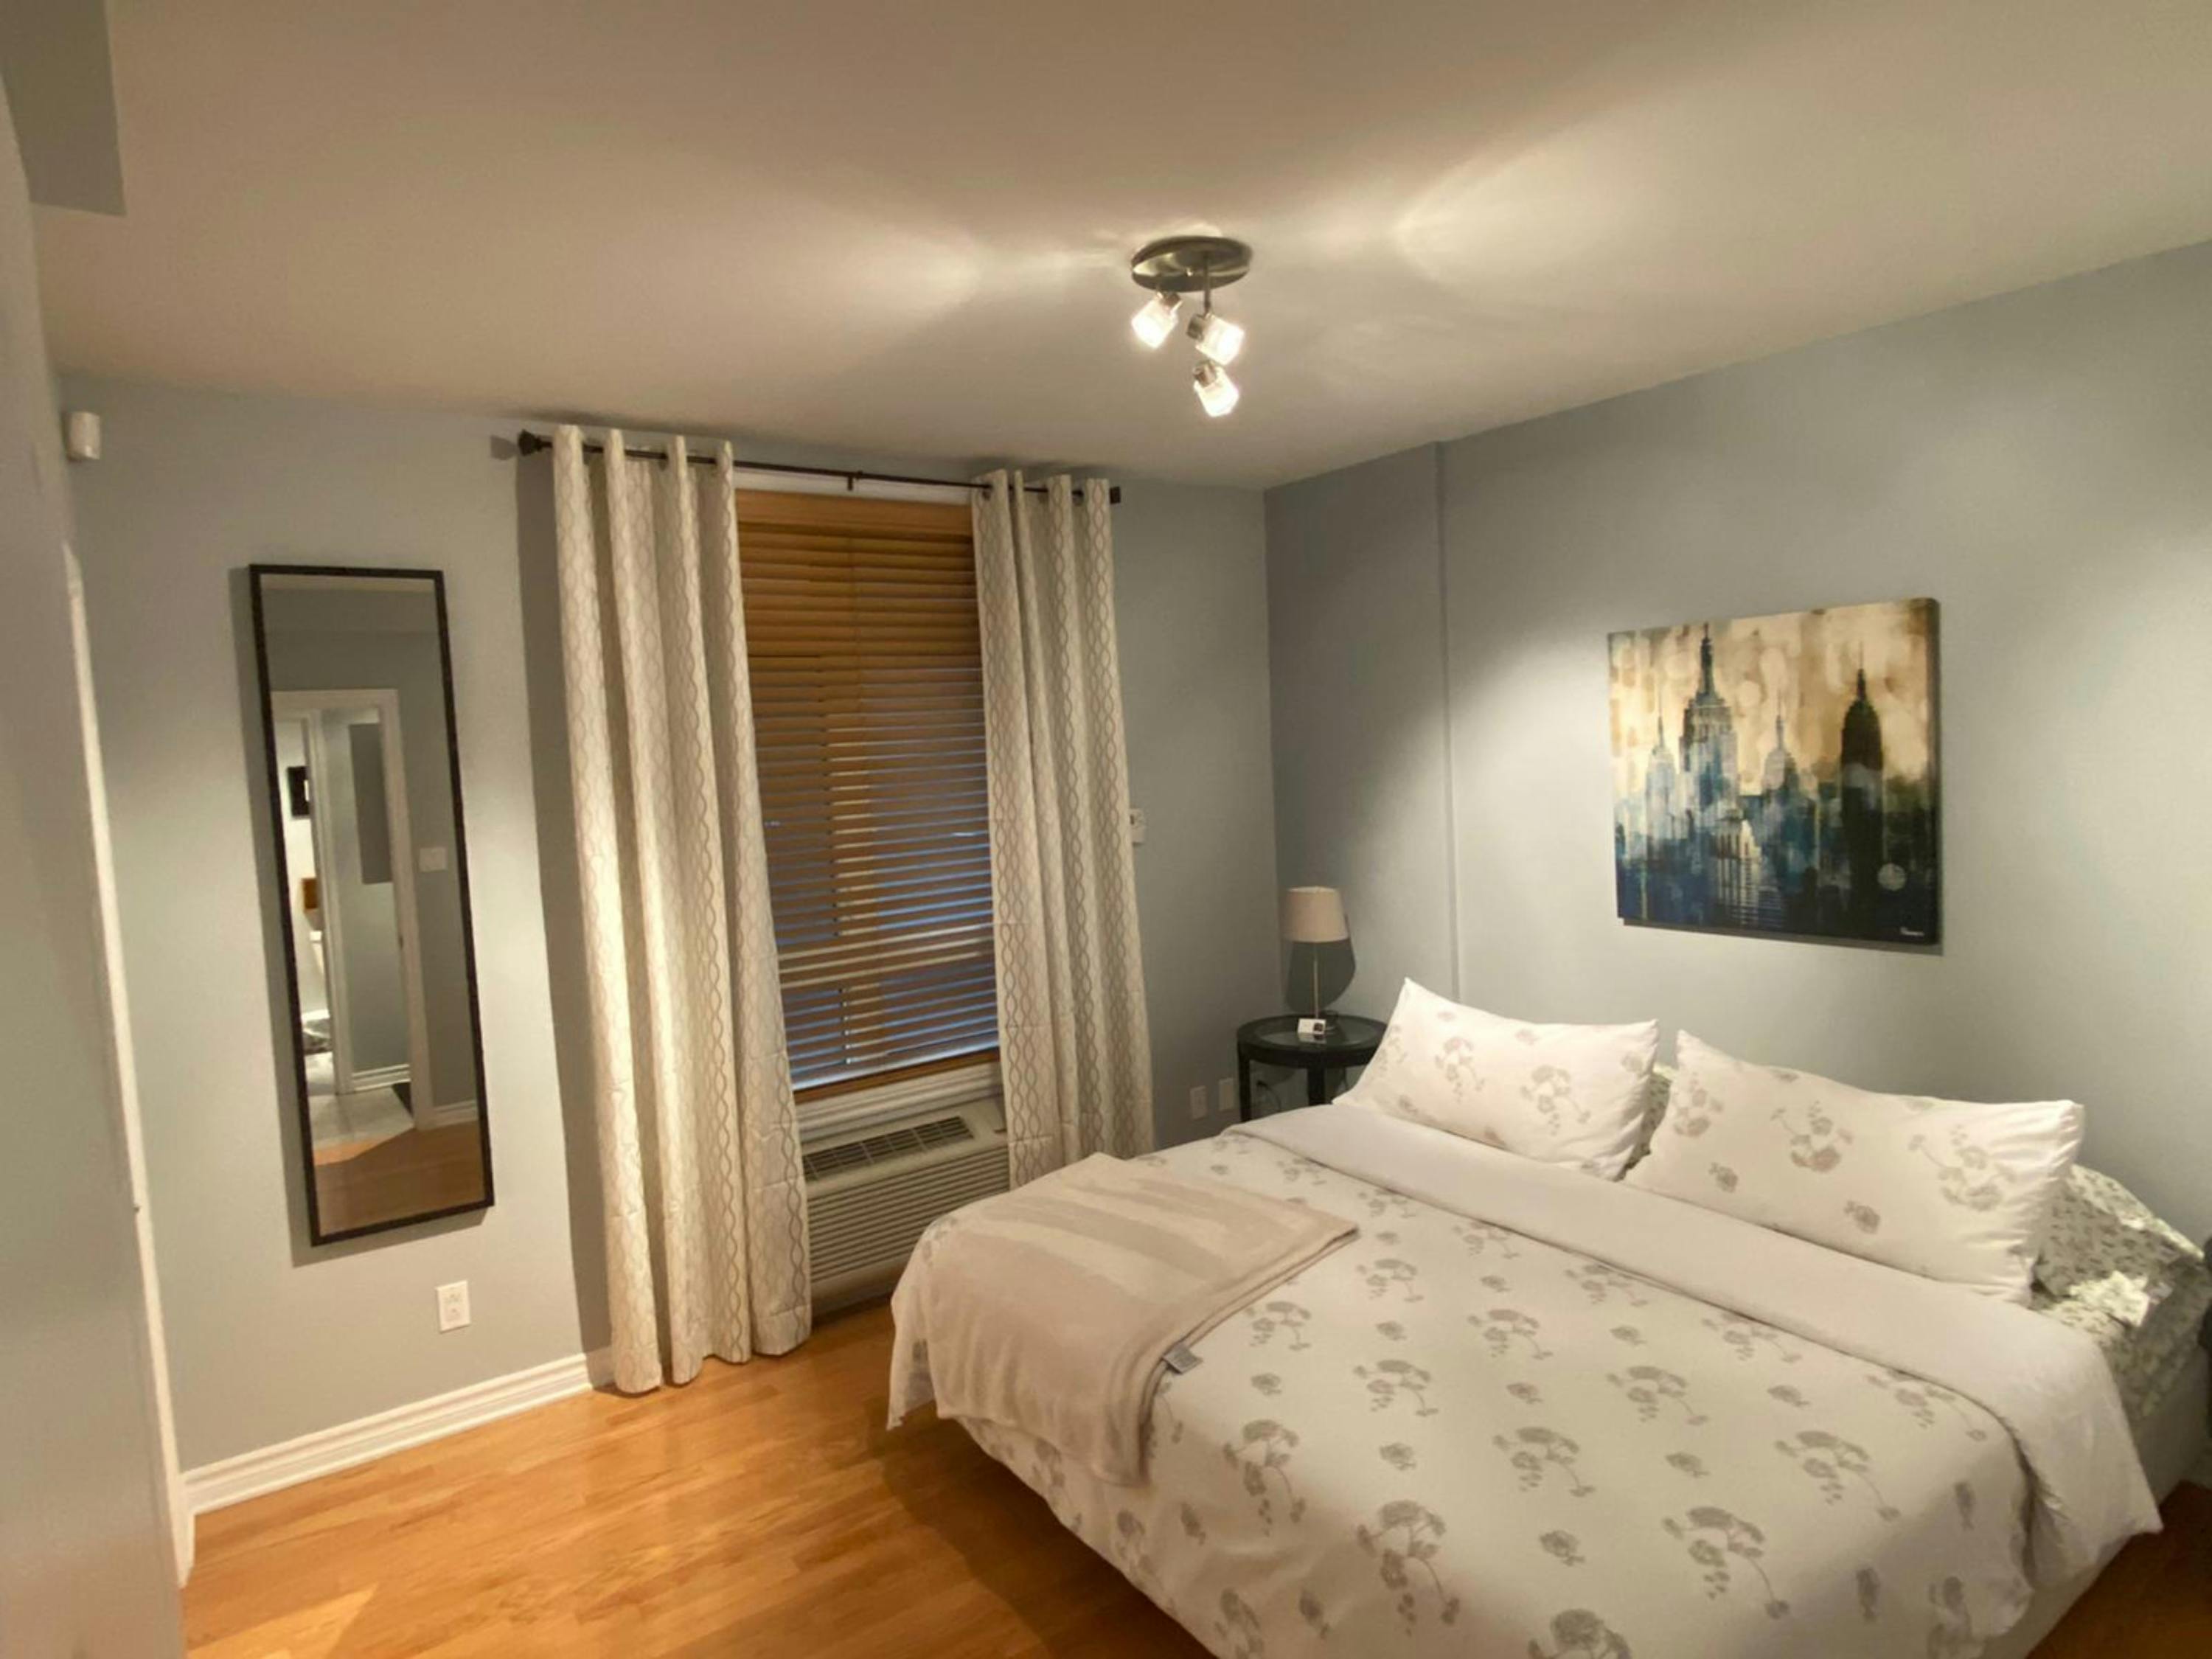 Professional Suite 202 Apart Hotel Montreal Tourist Residence 222512 2115 Rue Saint Urbain H2X 2N1 #aparthotelmontreal